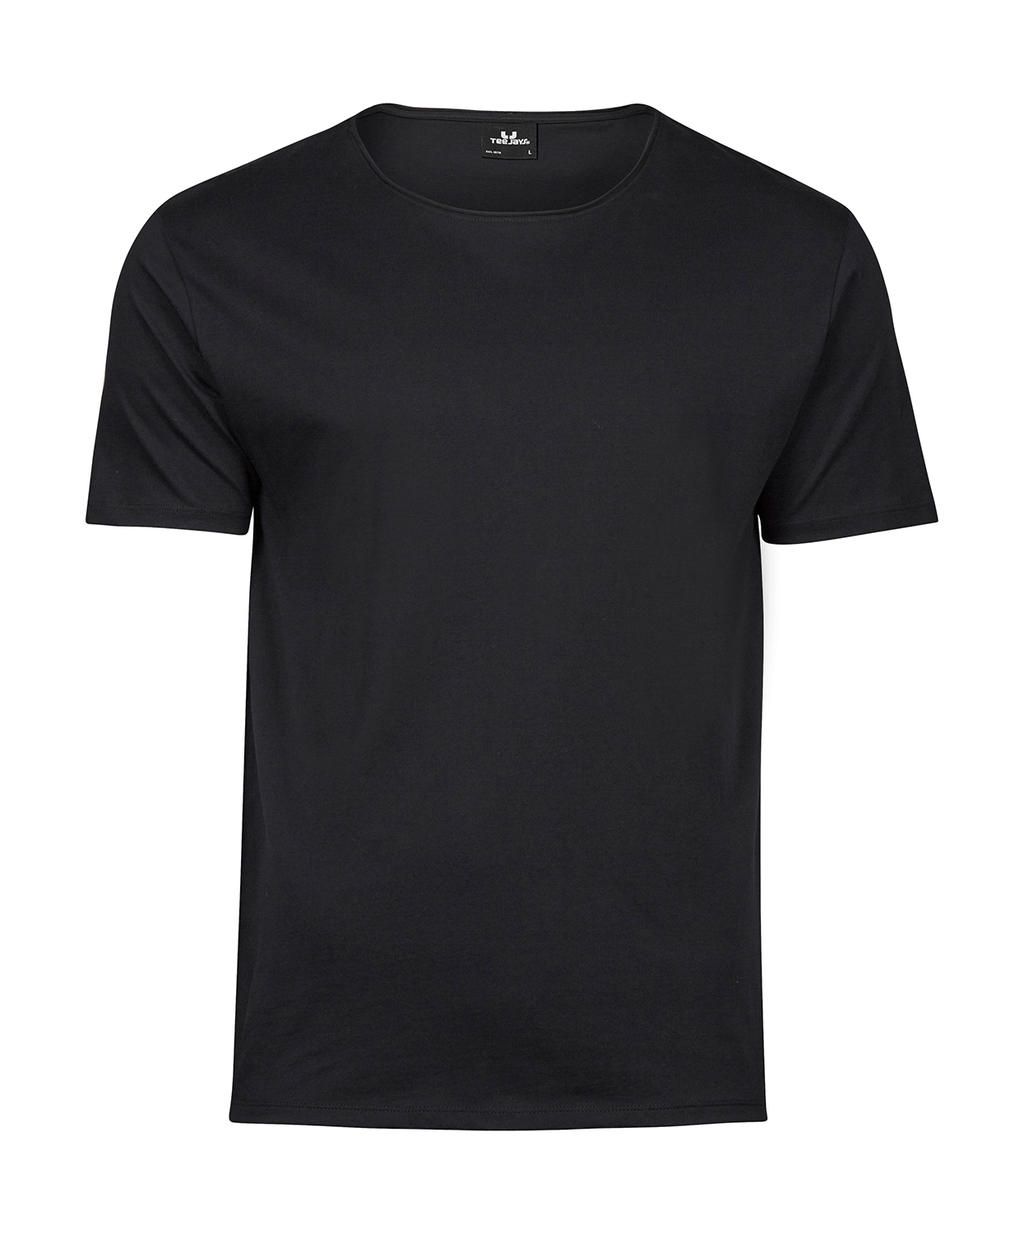 Tee Jays Raw Edge T-Shirt